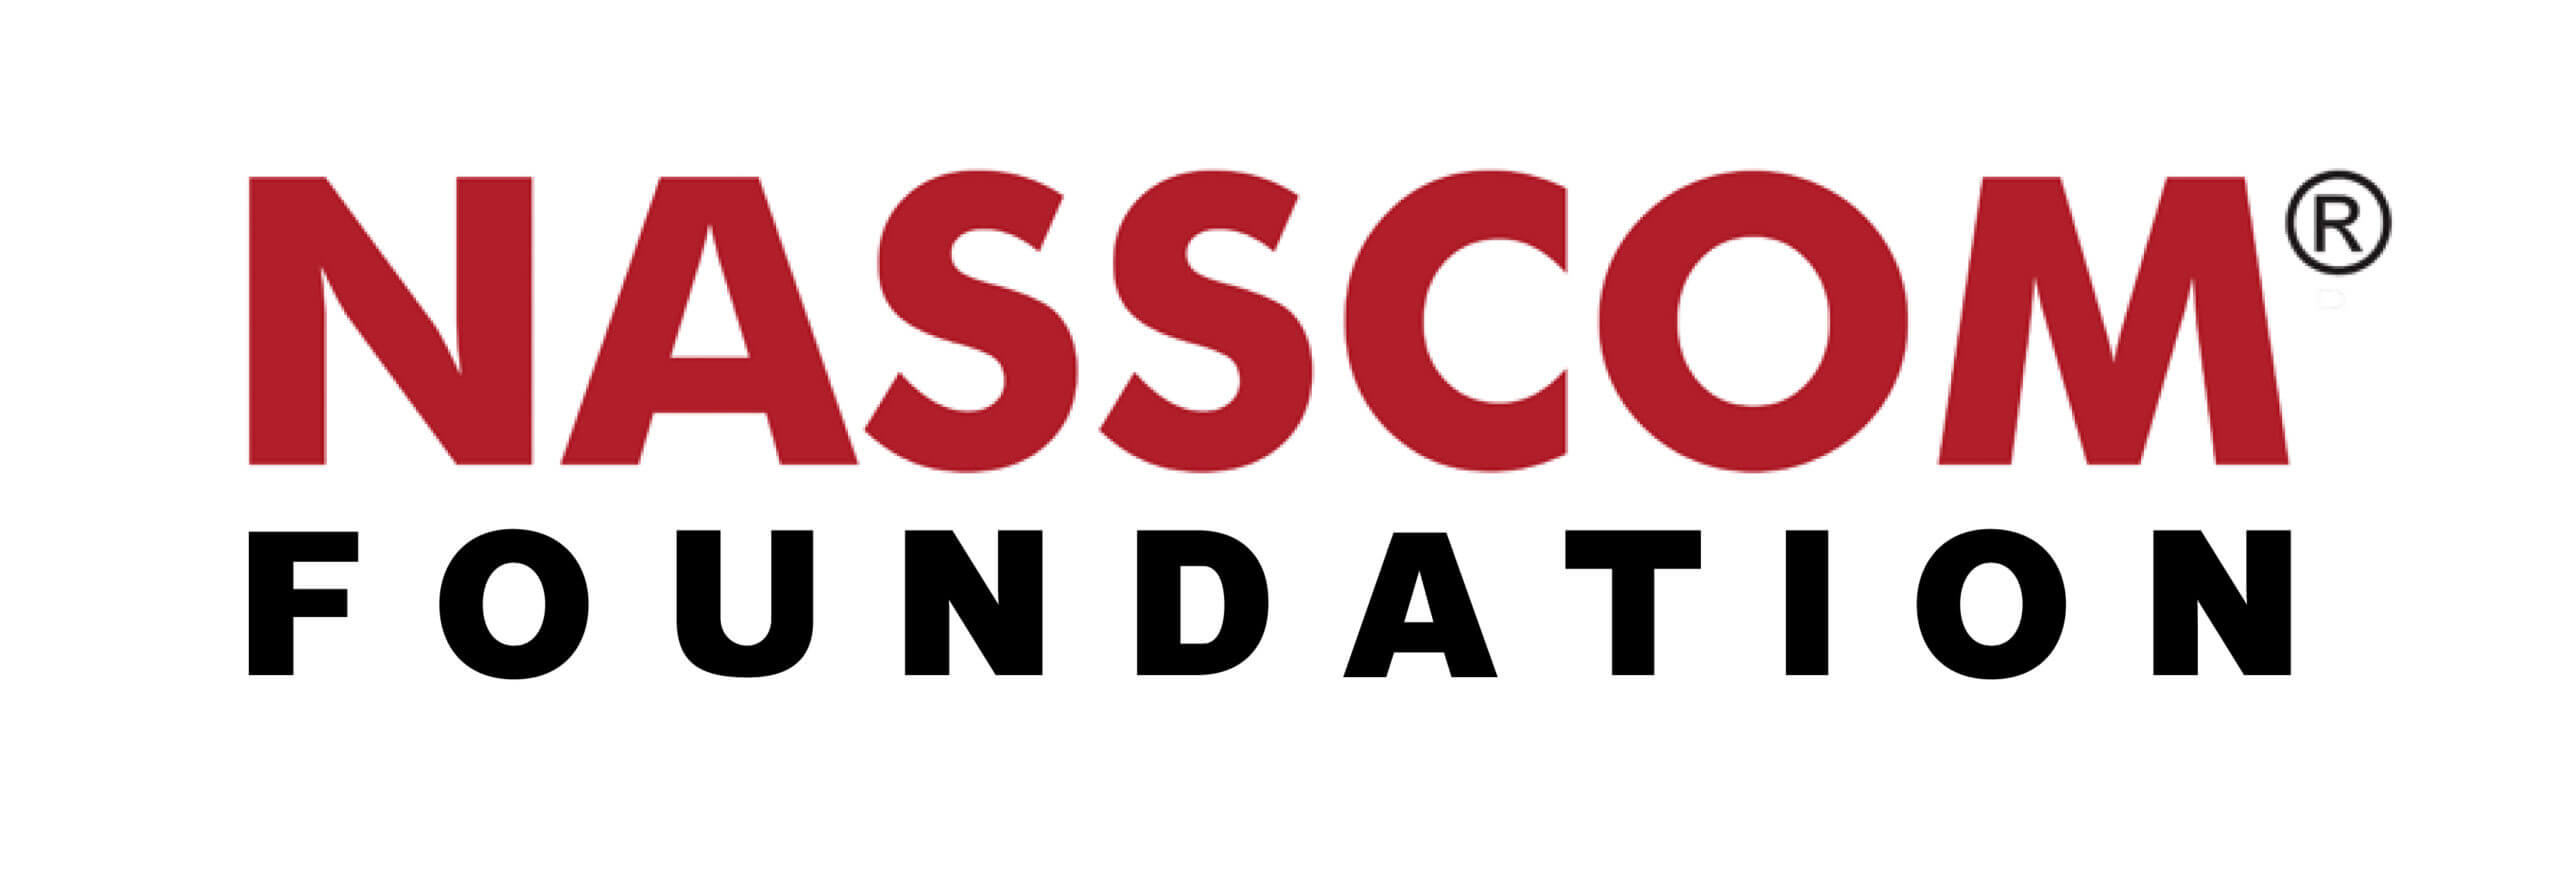 nasscom-foundation-scaled